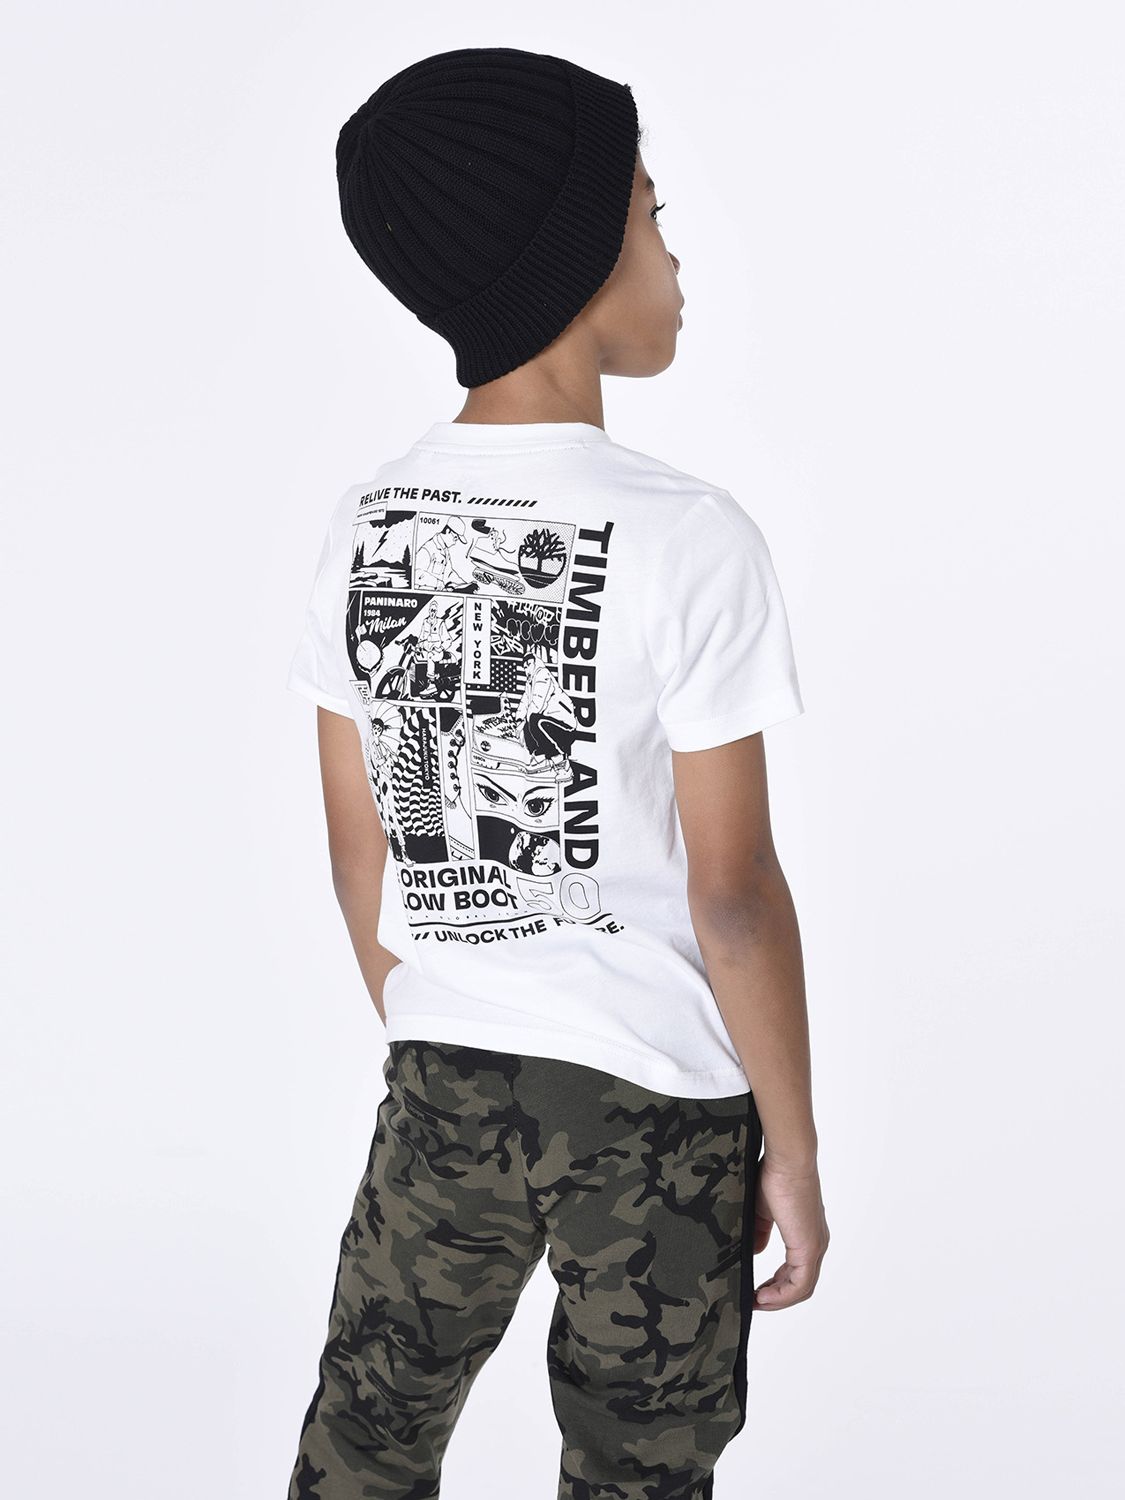 Buy Timberland Kids' Logo Graphic Organic Cotton T-Shirt, White Online at johnlewis.com